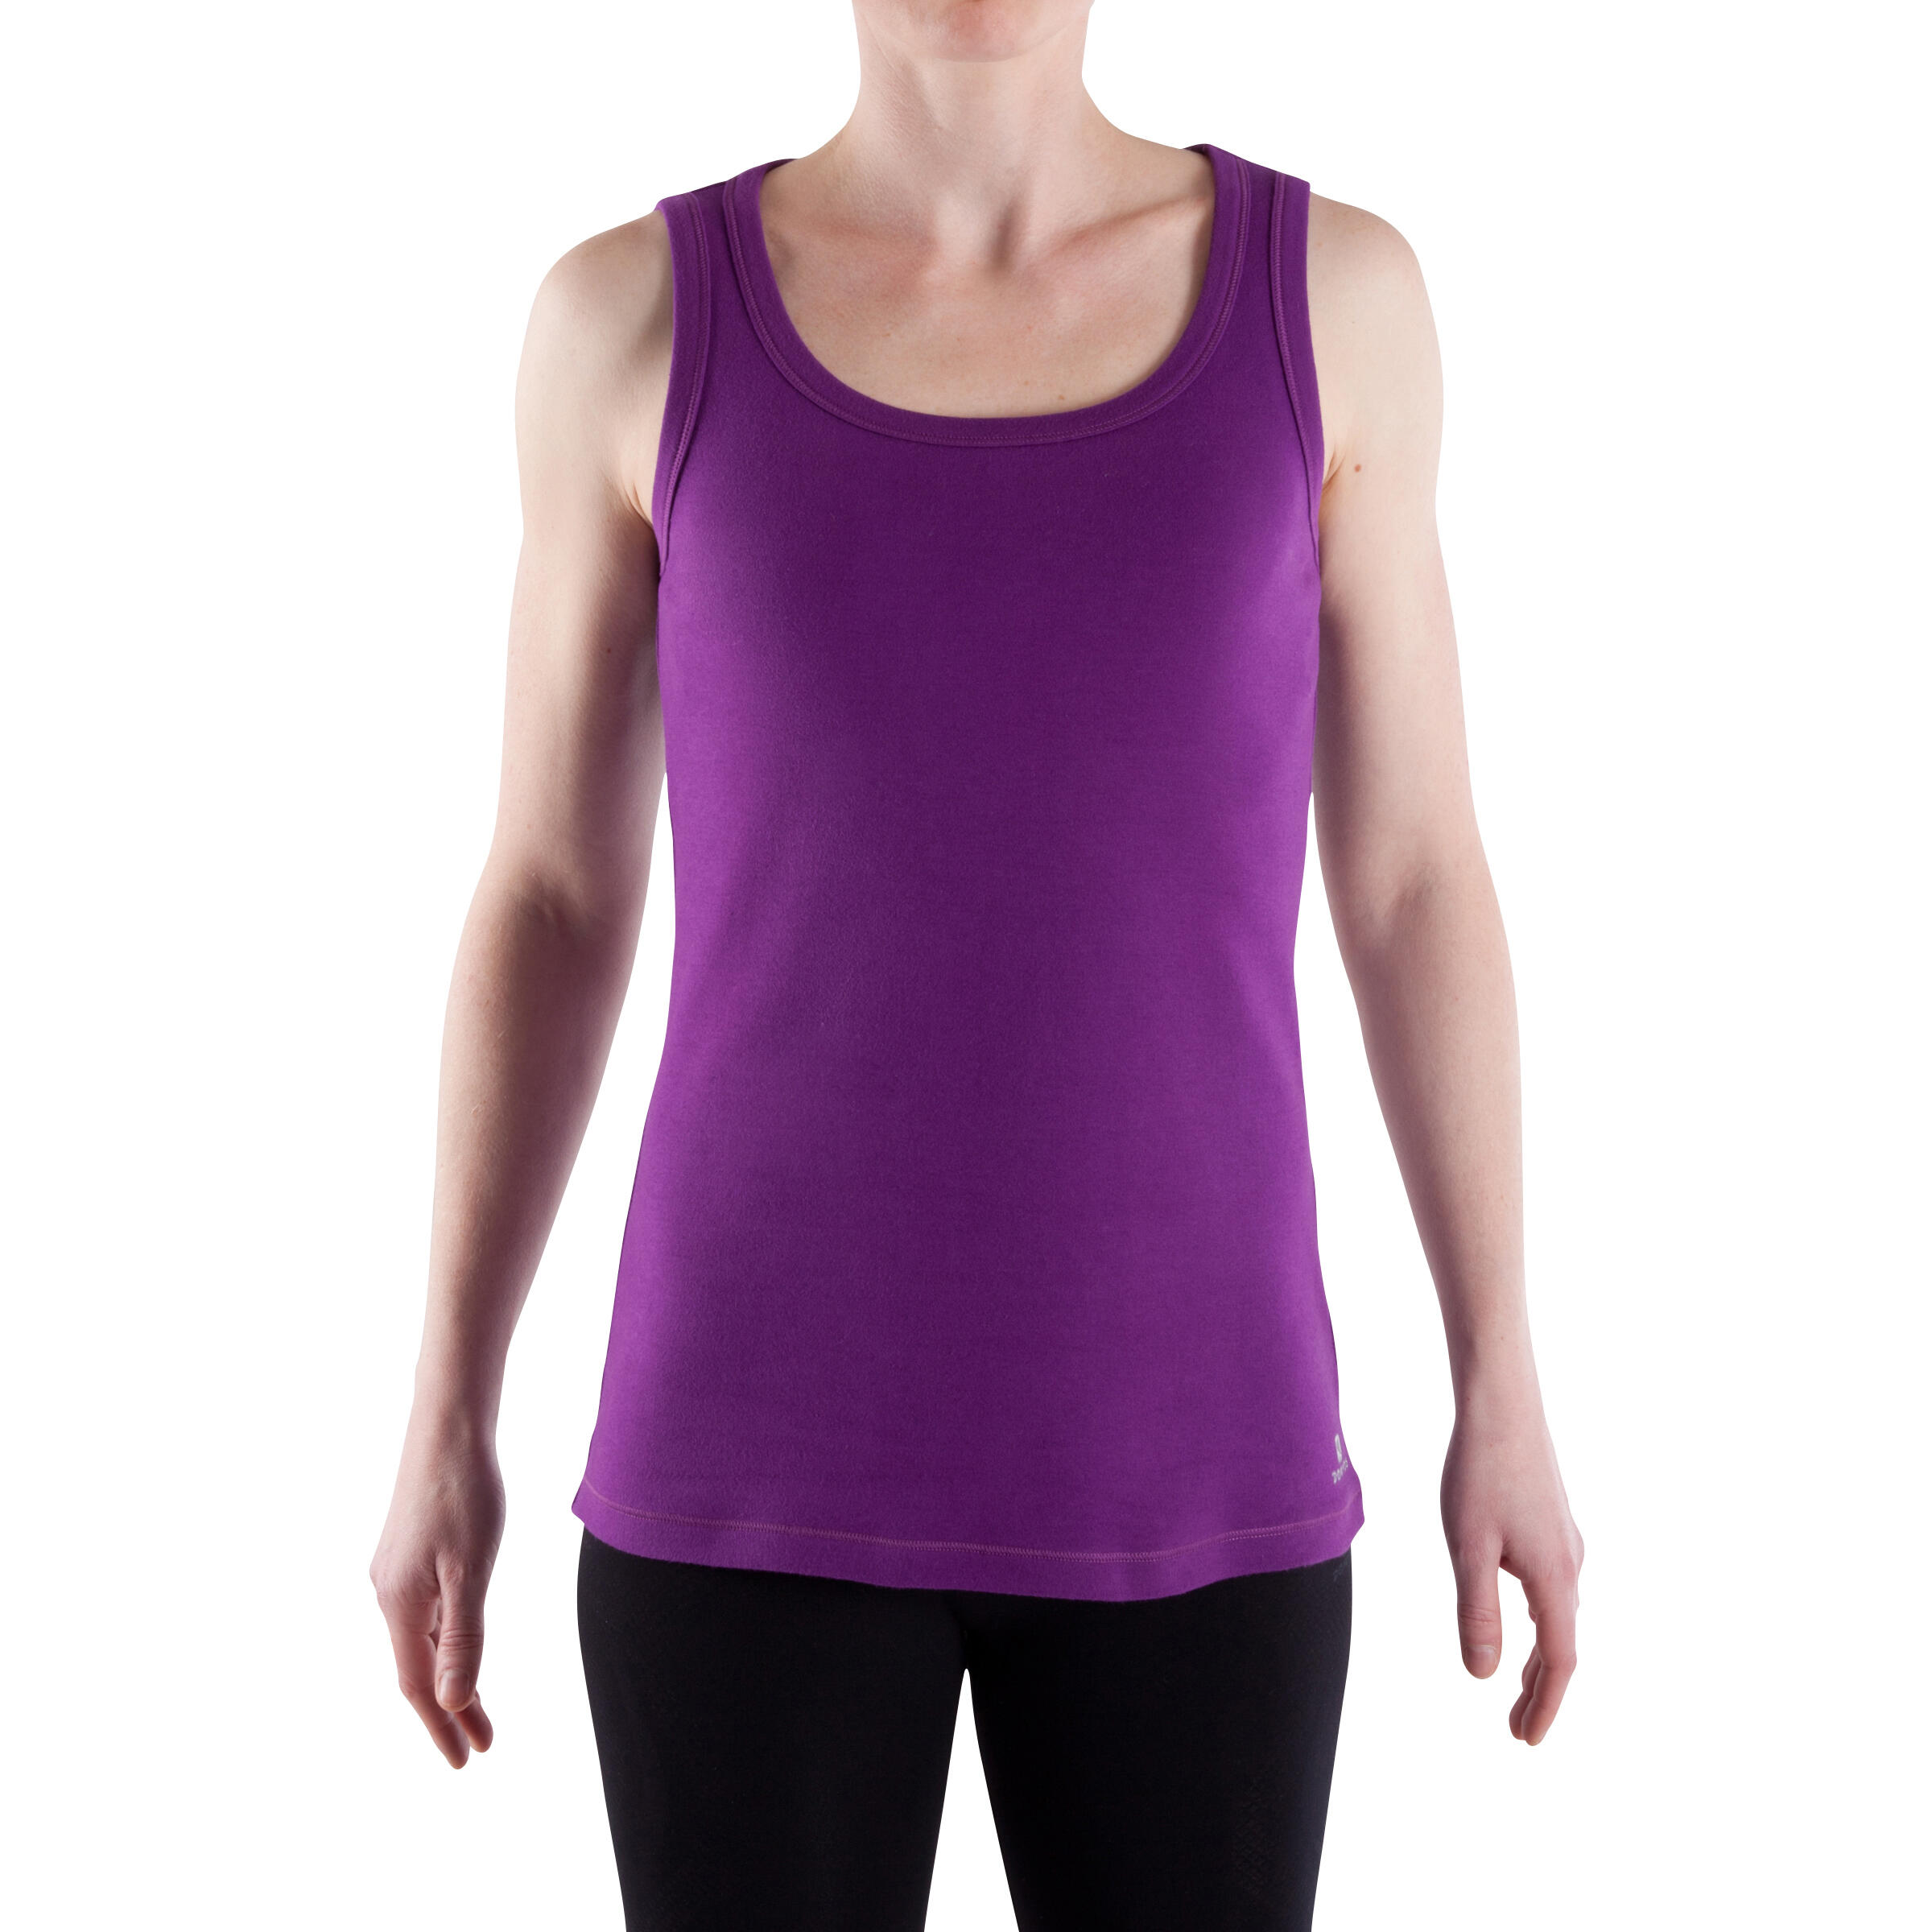 Women's organic cotton gentle gymnastics, yoga tank top - purple 2/6